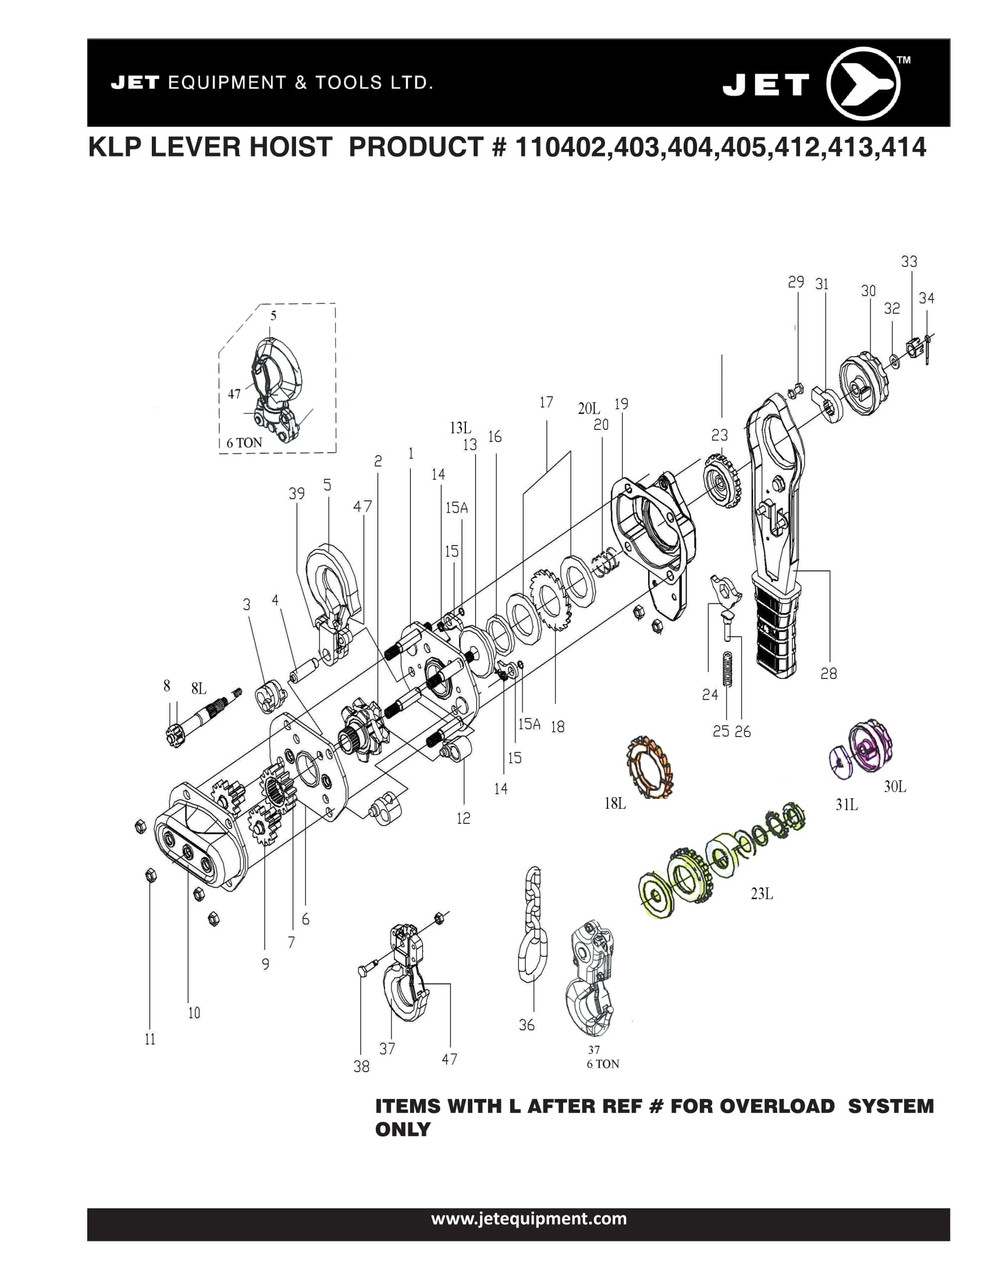 1-1/2T @ 5' Lift KLP Series Lever Chain Hoist  110403